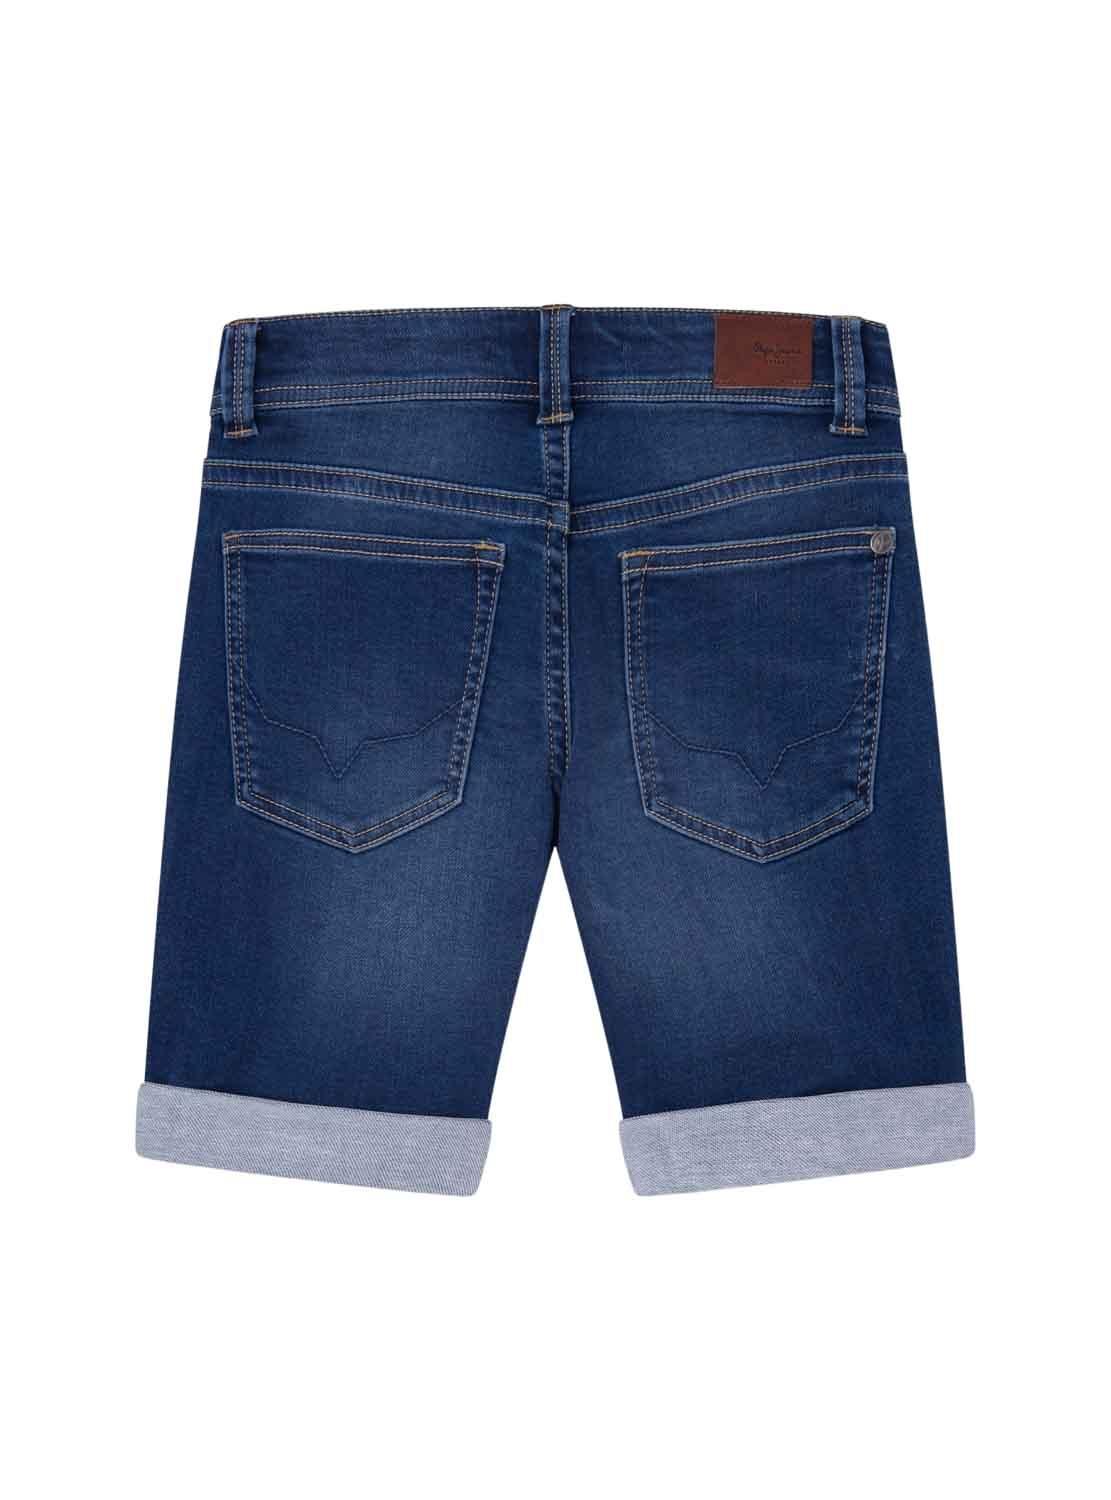 Bermudas Pepe Jeans Tracker Blu per Bambino